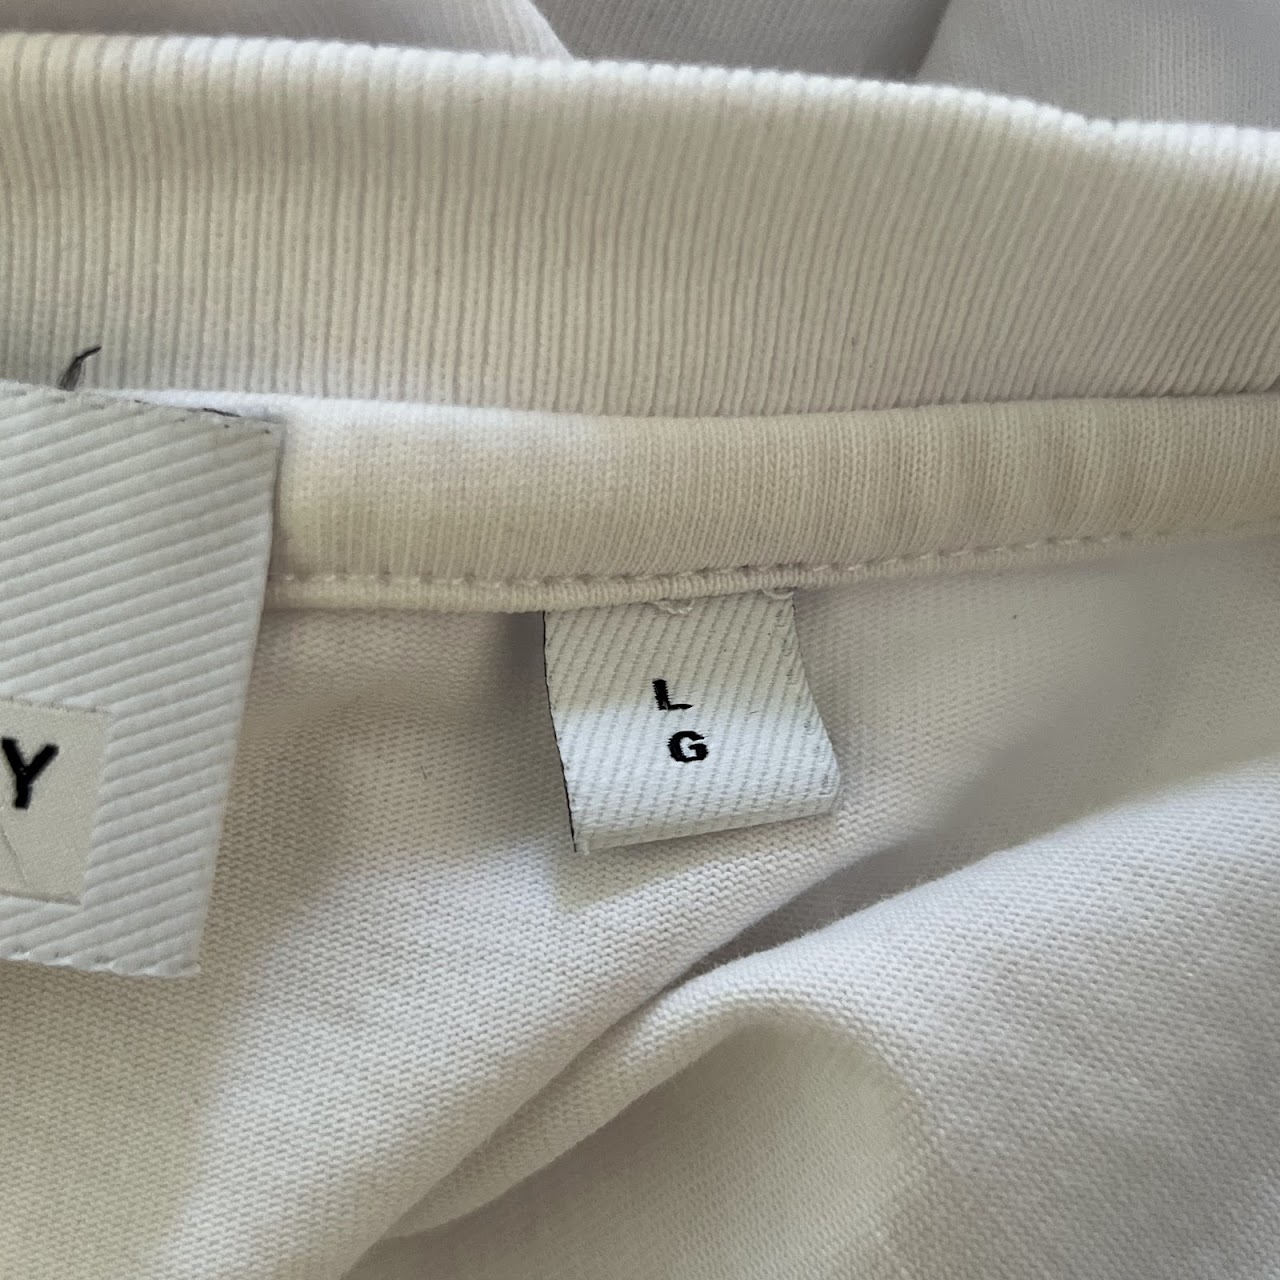 Burberry Check Panel  White T Shirt